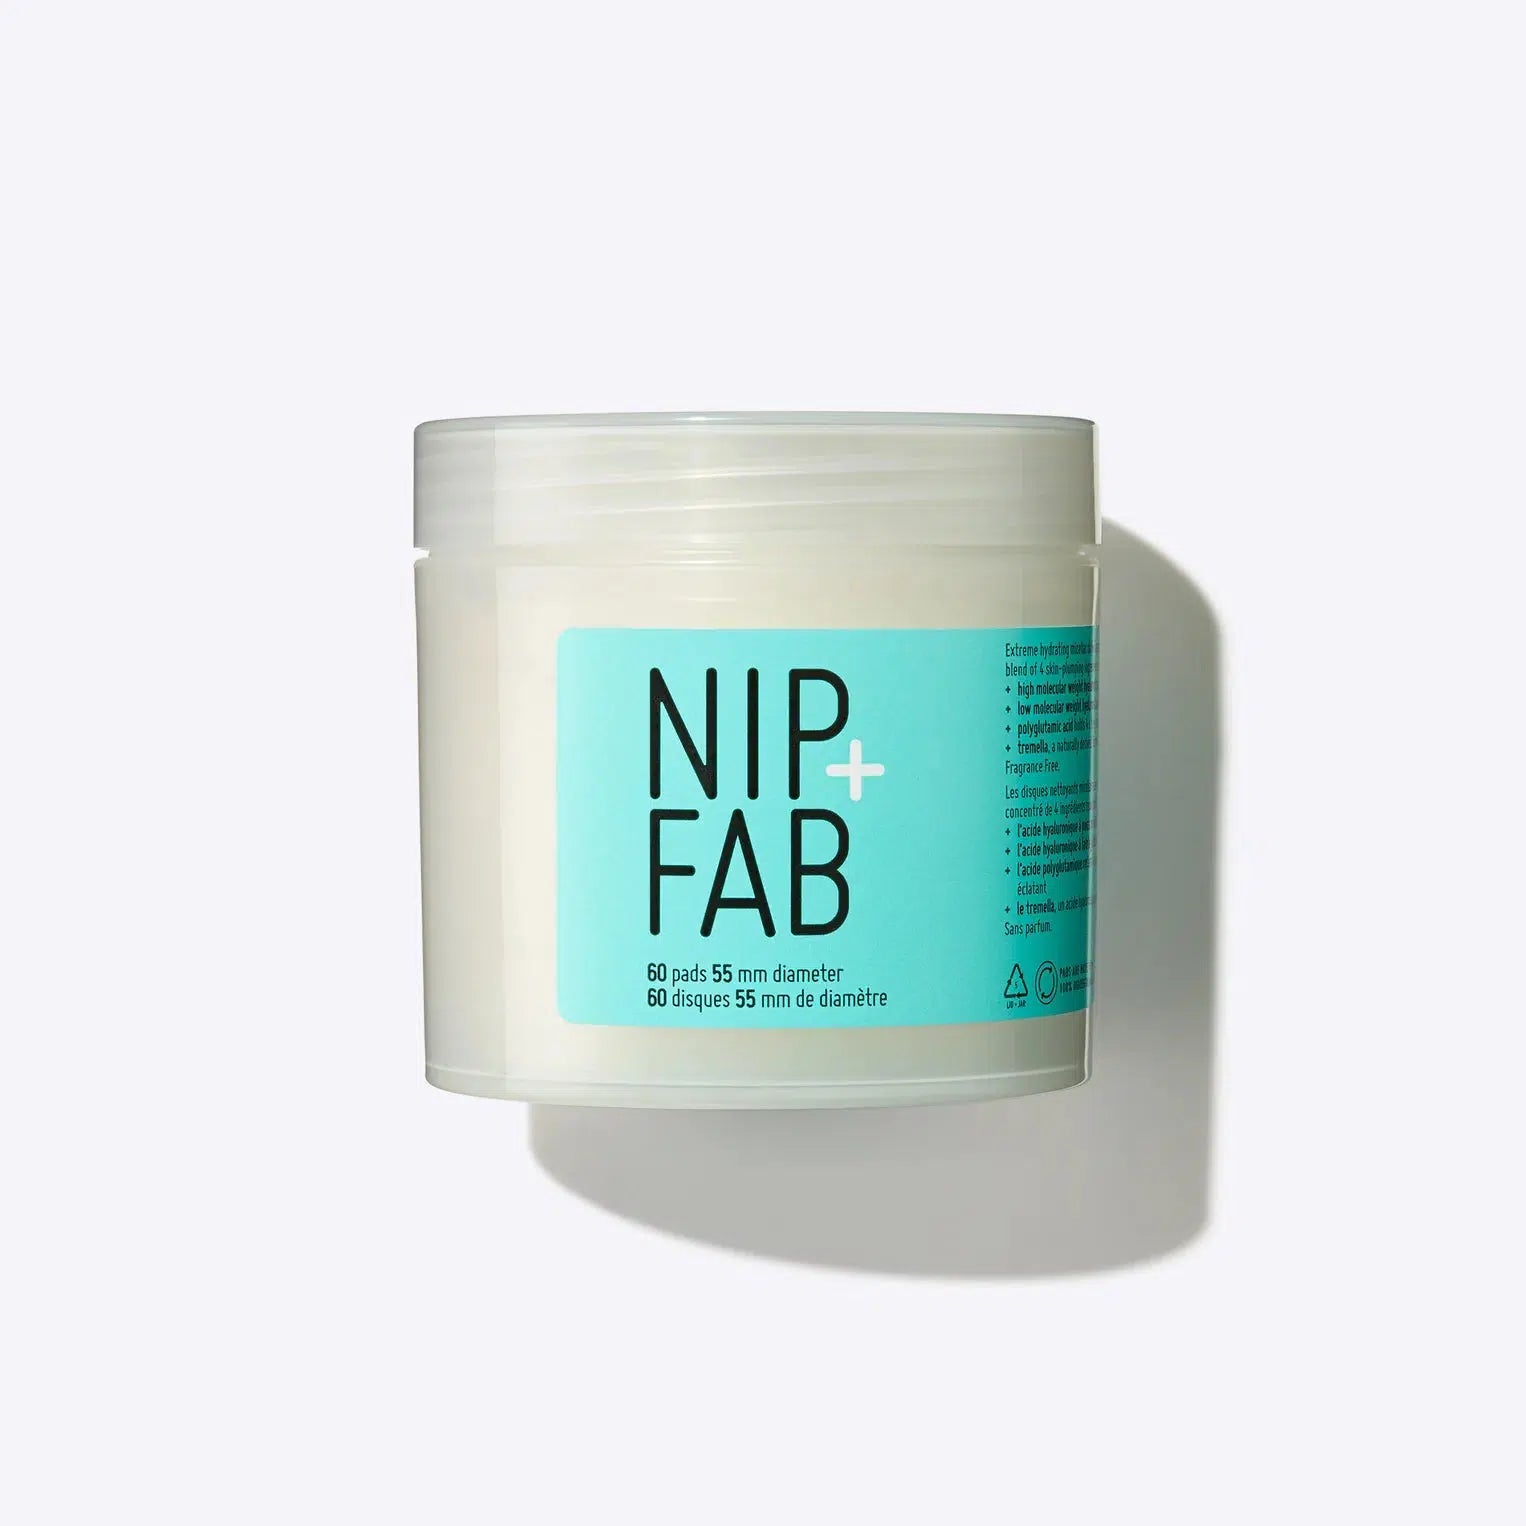 NIP + FAB Hyaluronic Fix Micellar Cleansing 60 Pads